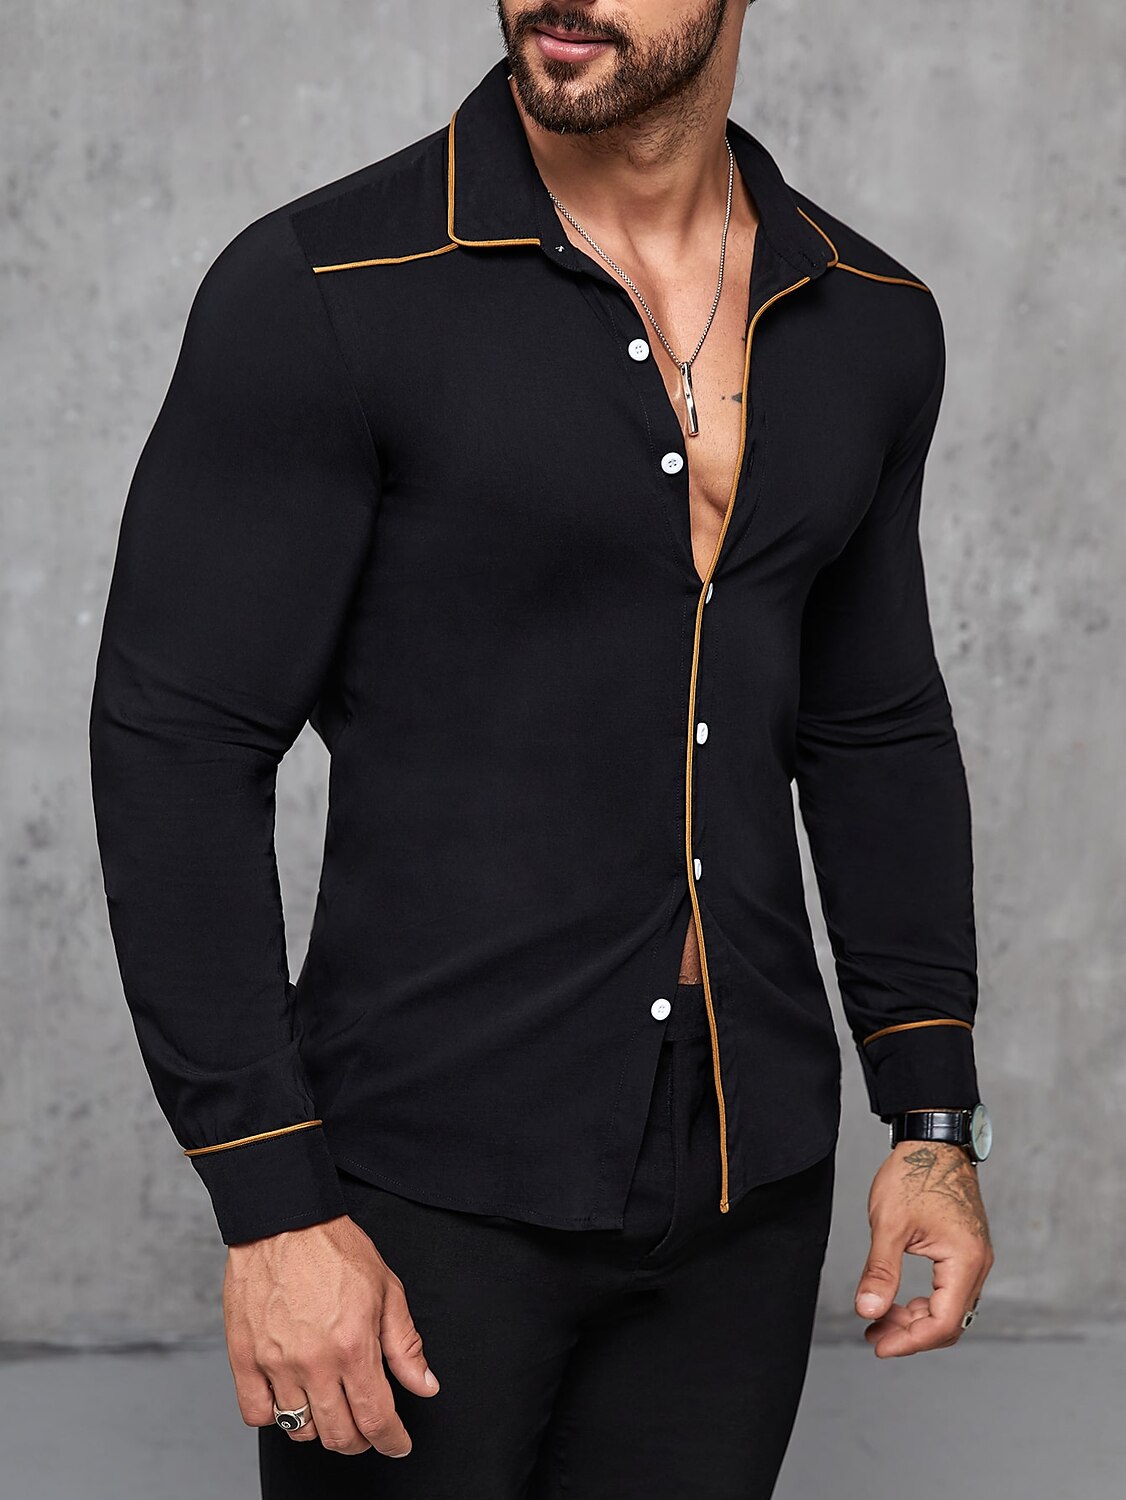 Men's Outdoor Casual Fashion Vacation Breathable Comfortable Light Plain Lapel Long Sleeve Shirt